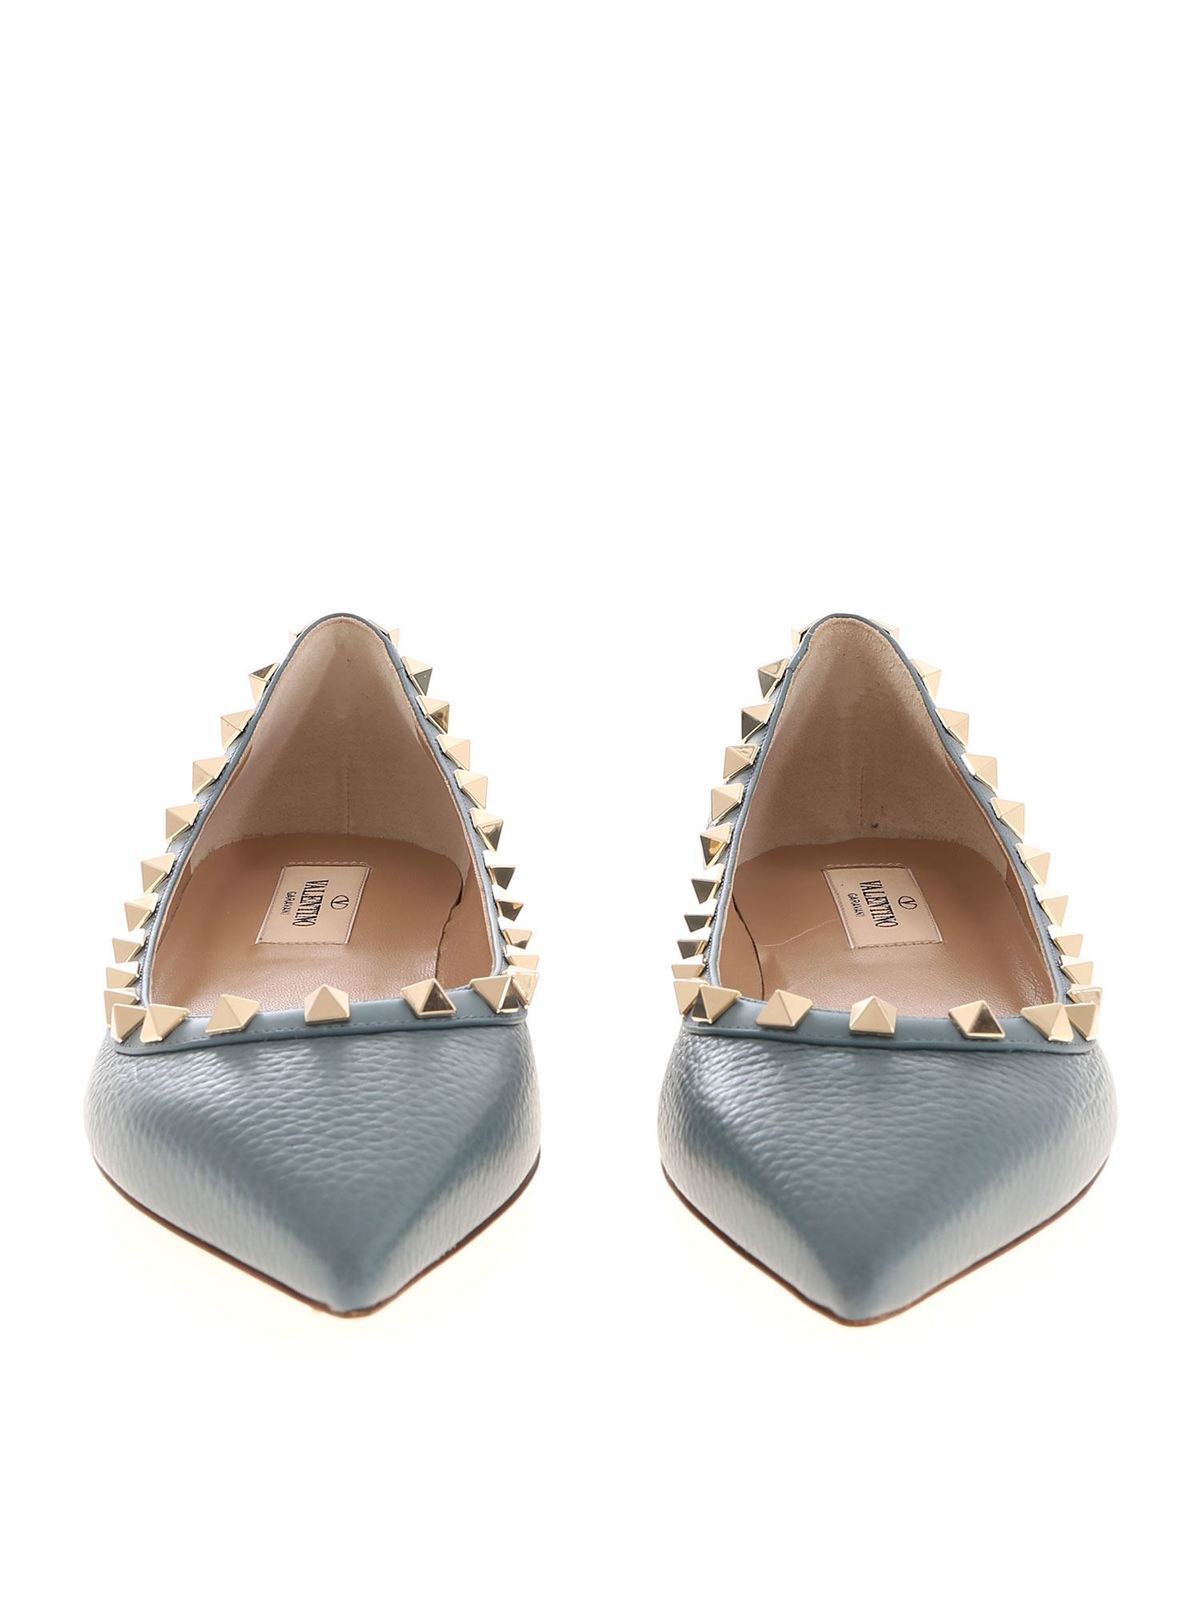 blyant lindring Woods Flat shoes Valentino Garavani - Rockstud ballerinas in pale blue color -  TW2S0403VCE16U